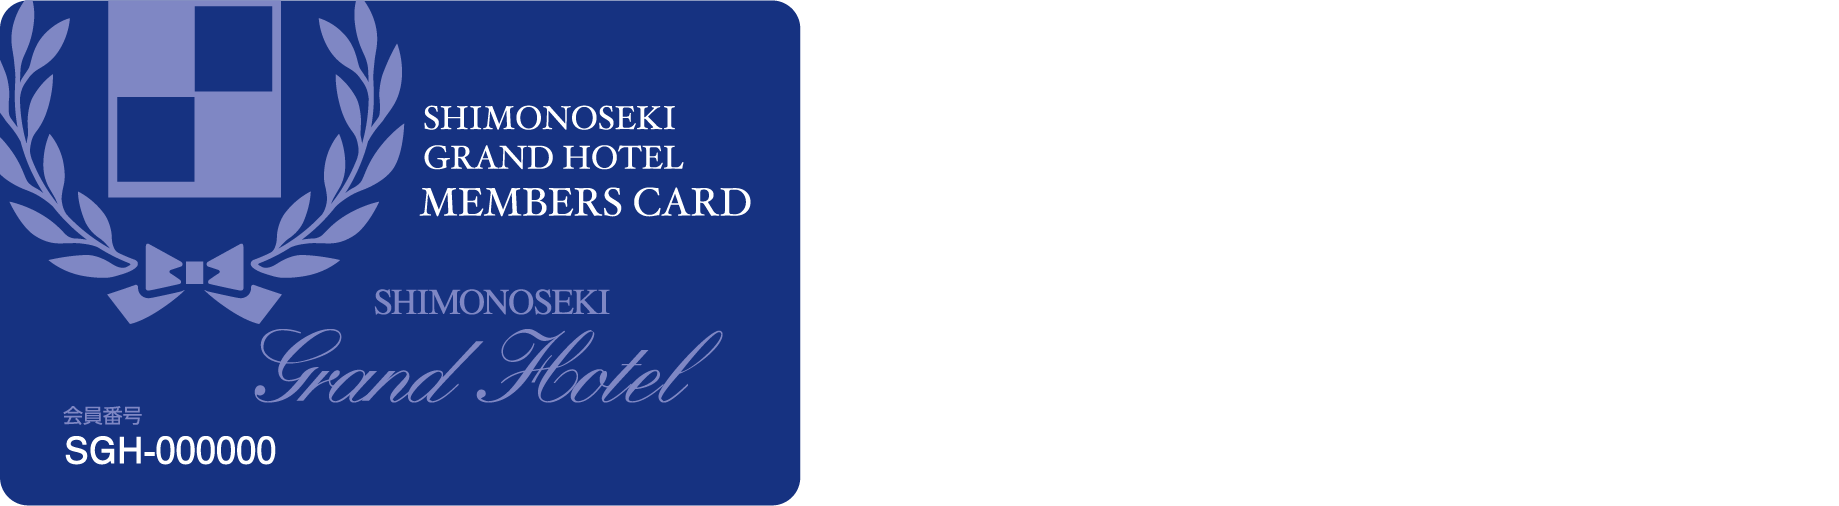 SHIMONOSEKI GRAND HOTEL MEMBERS CARD